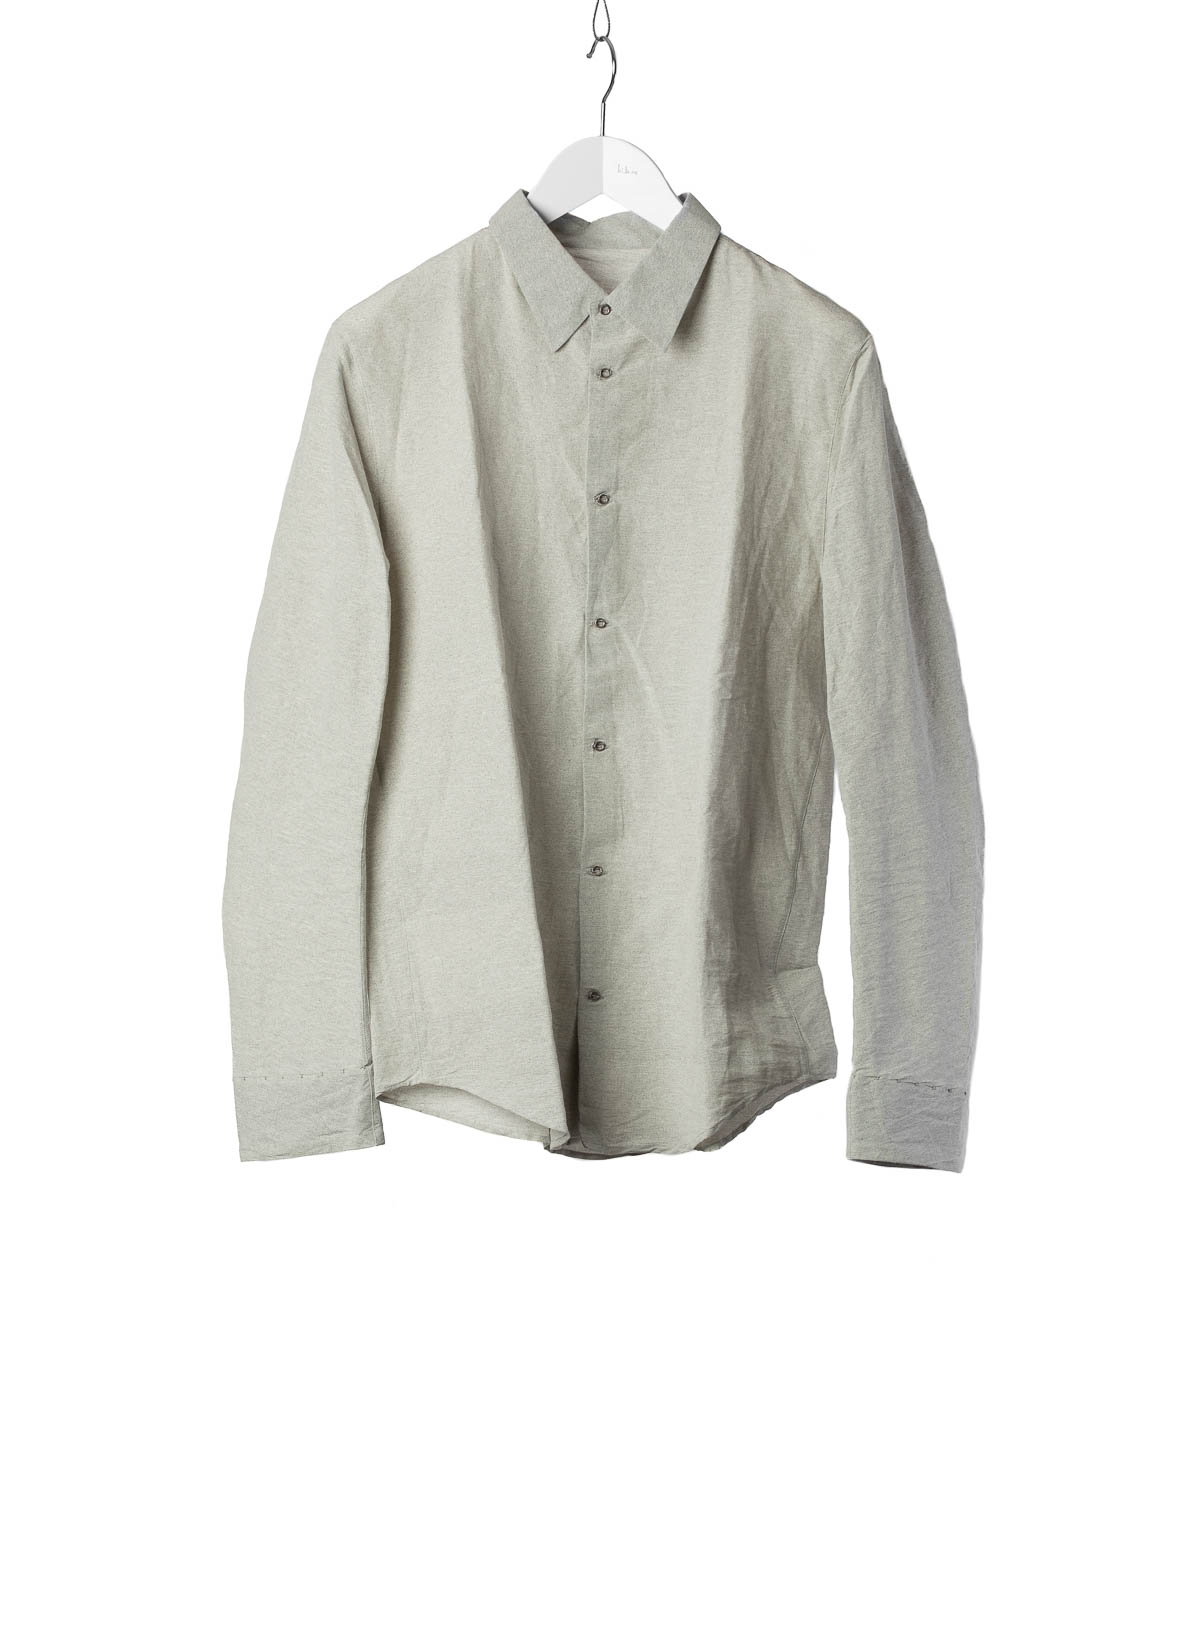 hide-m | TAICHI MURAKAMI Men Inside Shirt, ink grey, paper/cotton